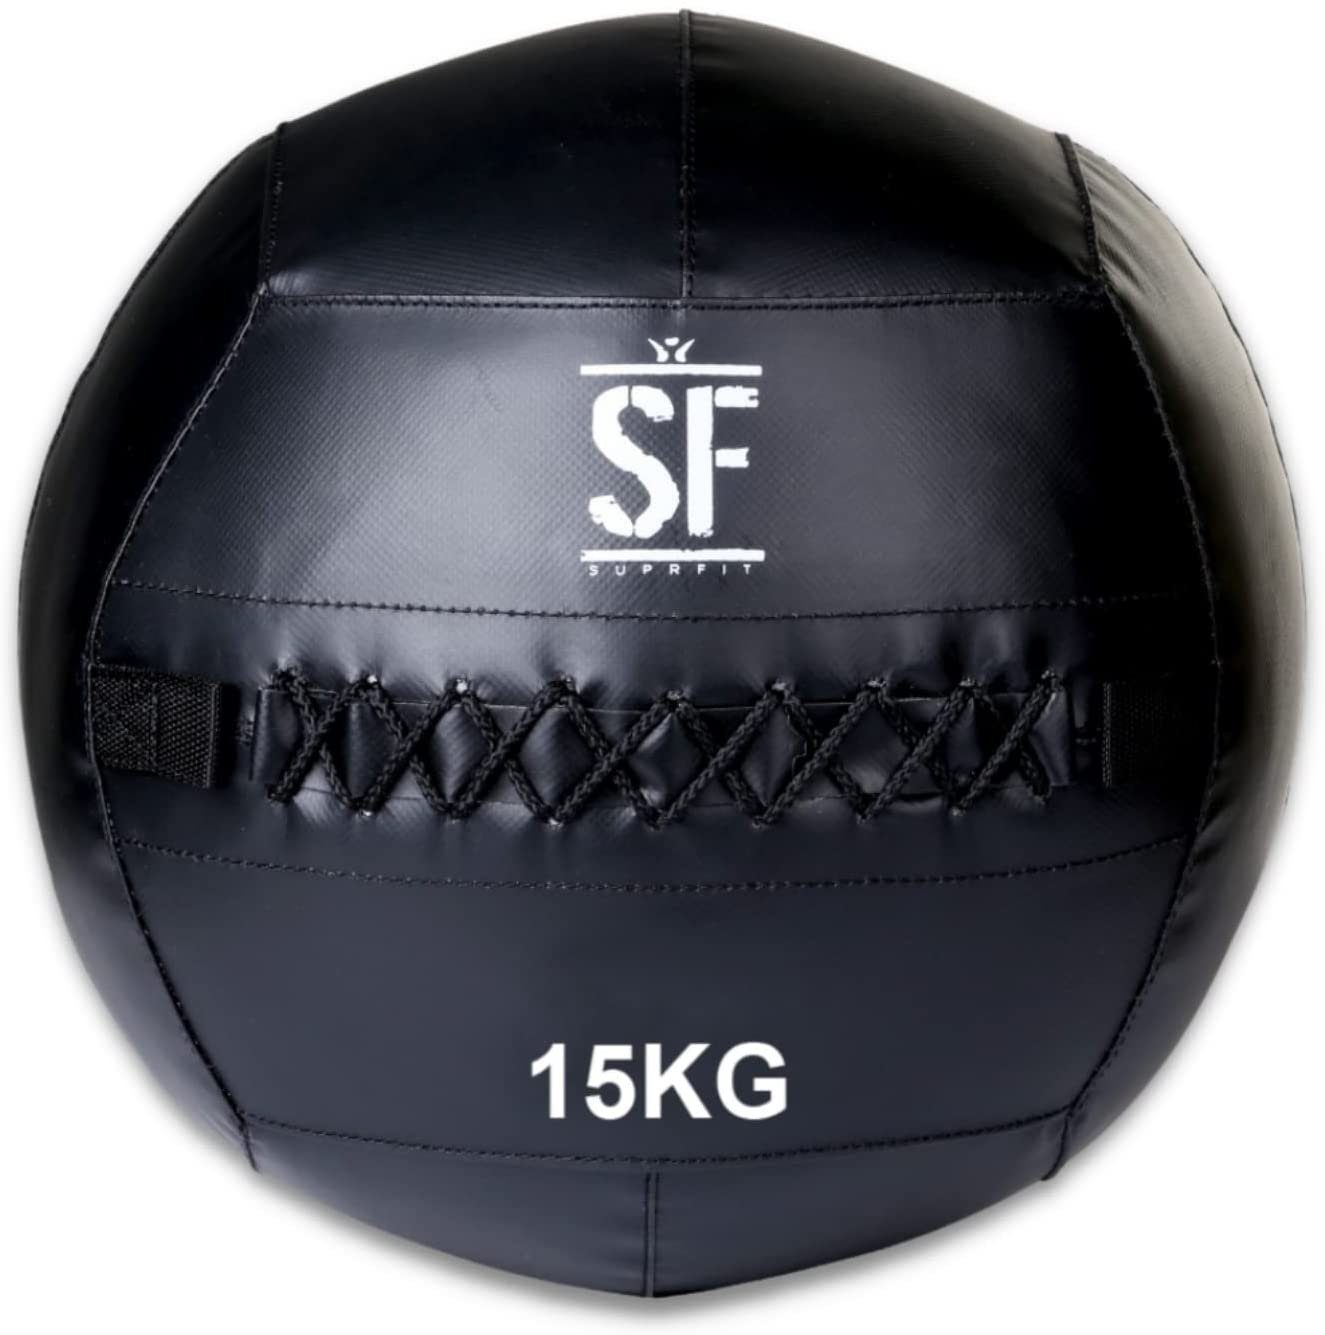 SF SUPRFIT Medizinball Medizinball Cross- für Functional & Training